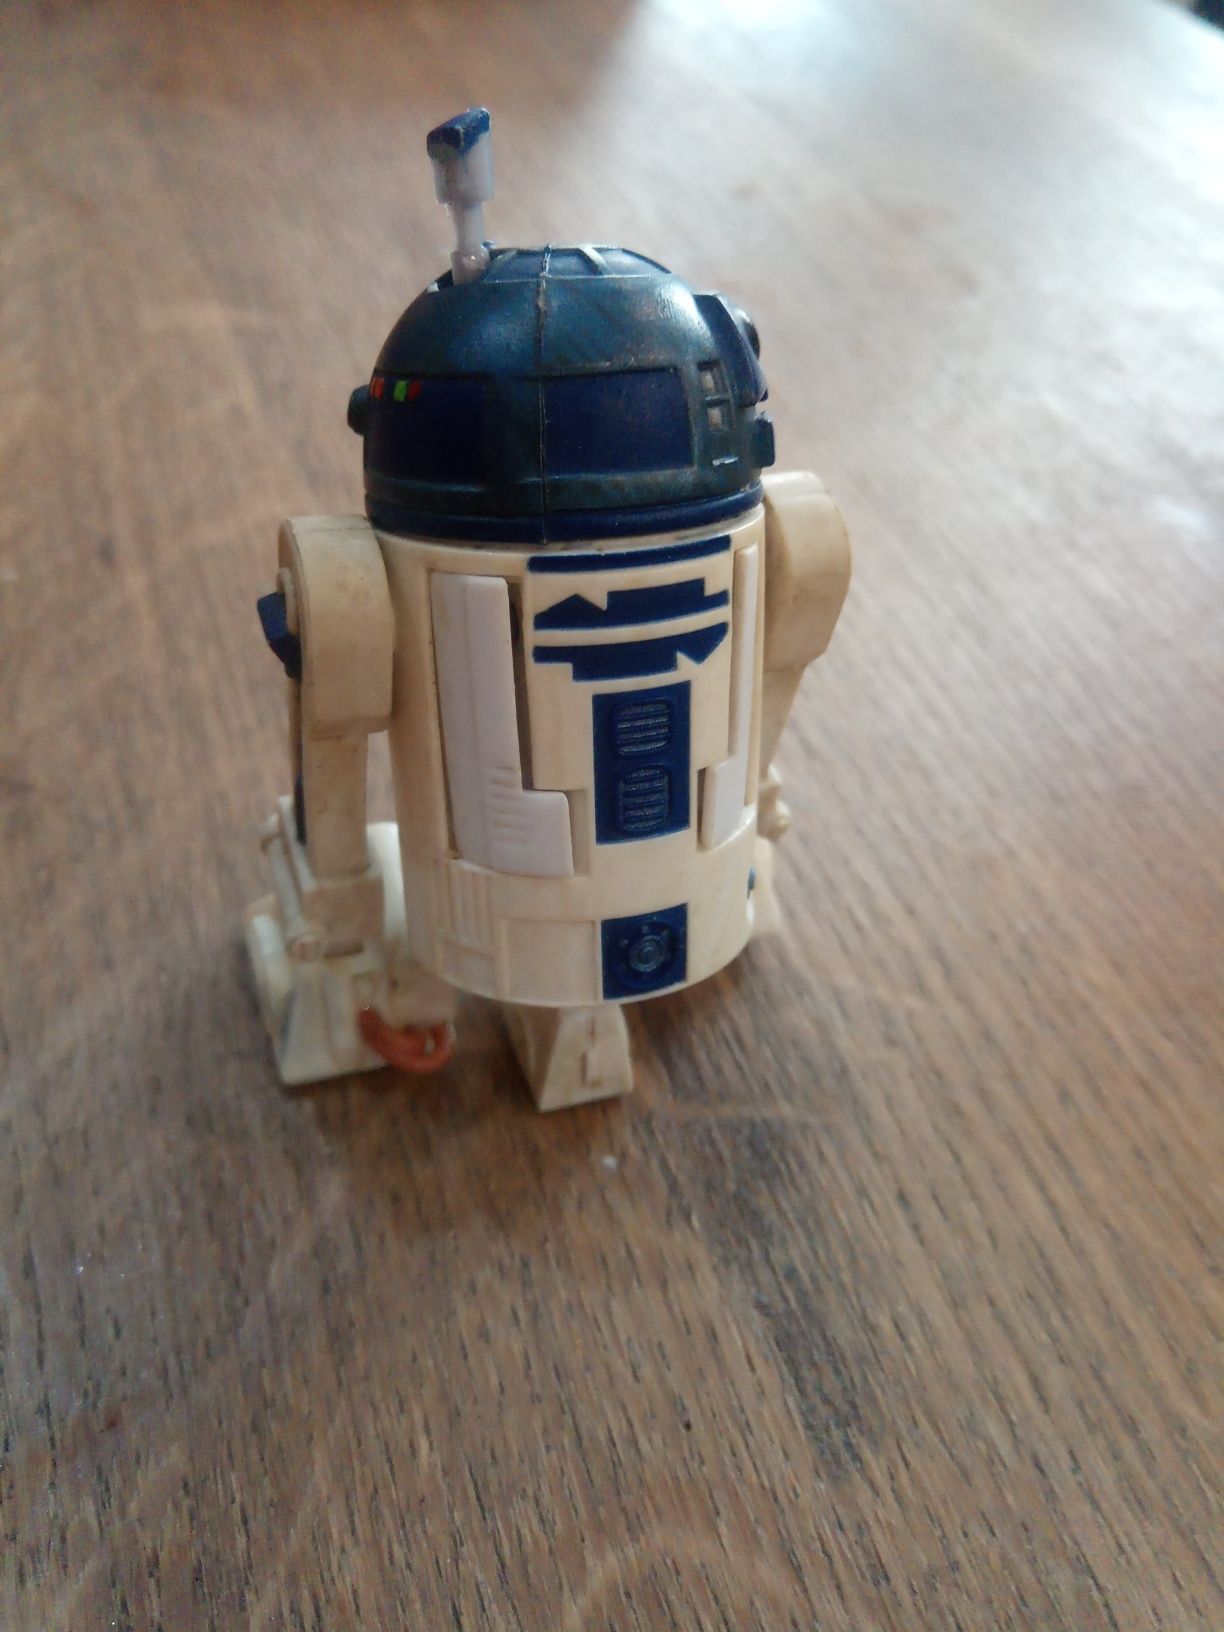 Robot R2-D2 Star Wars LFL Hasbro 2008 vintage kolekcja